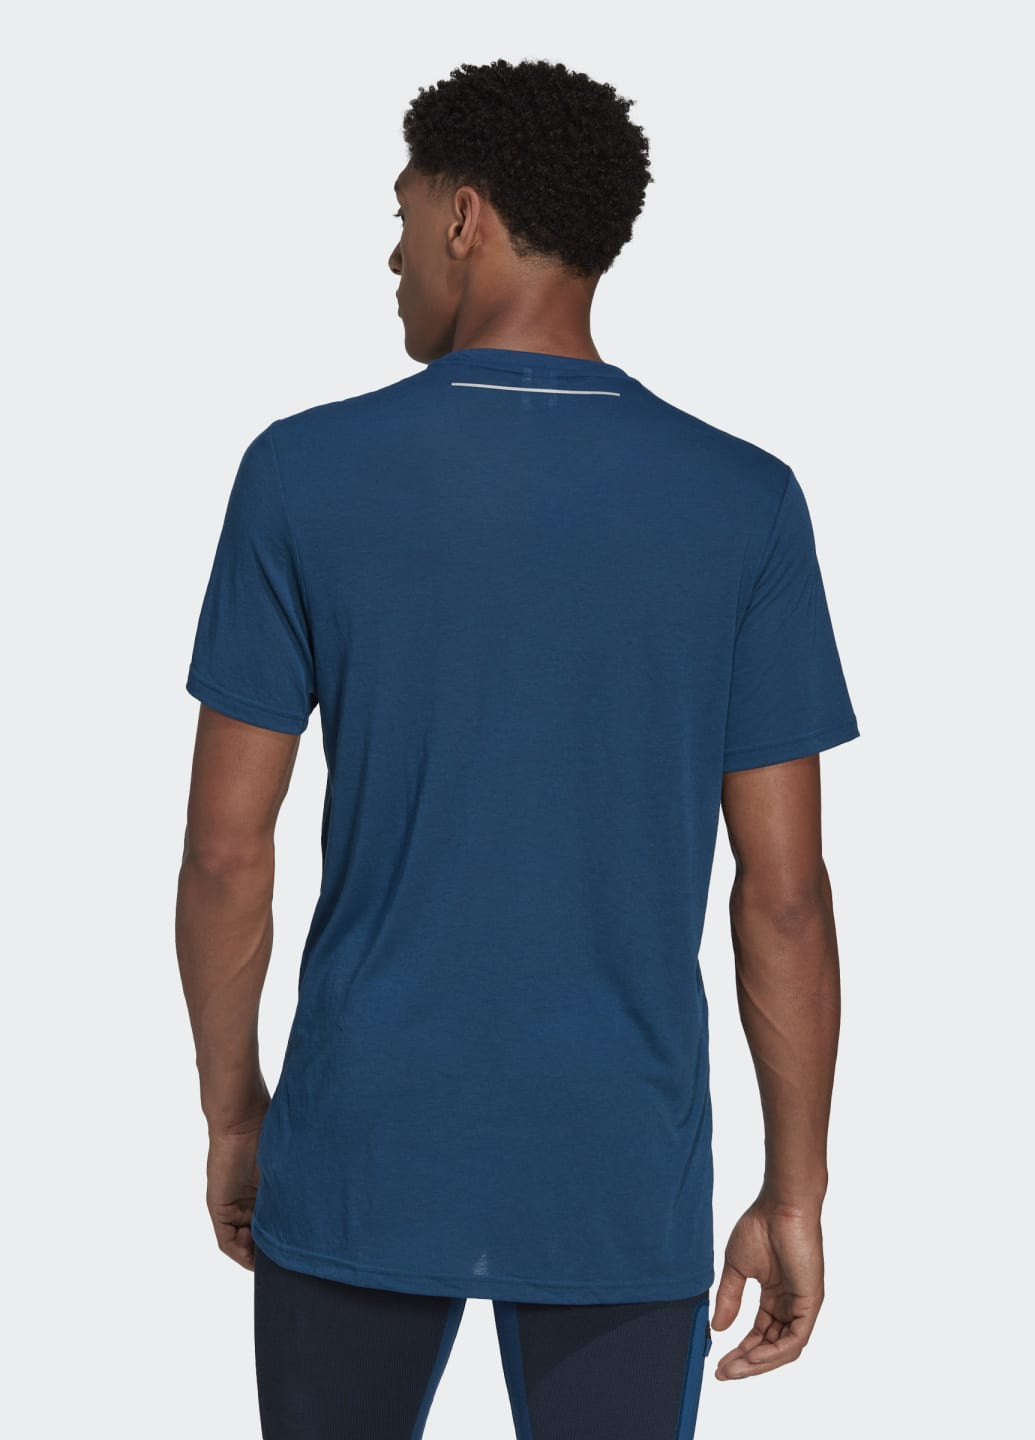 Синяя футболка x-city adidas